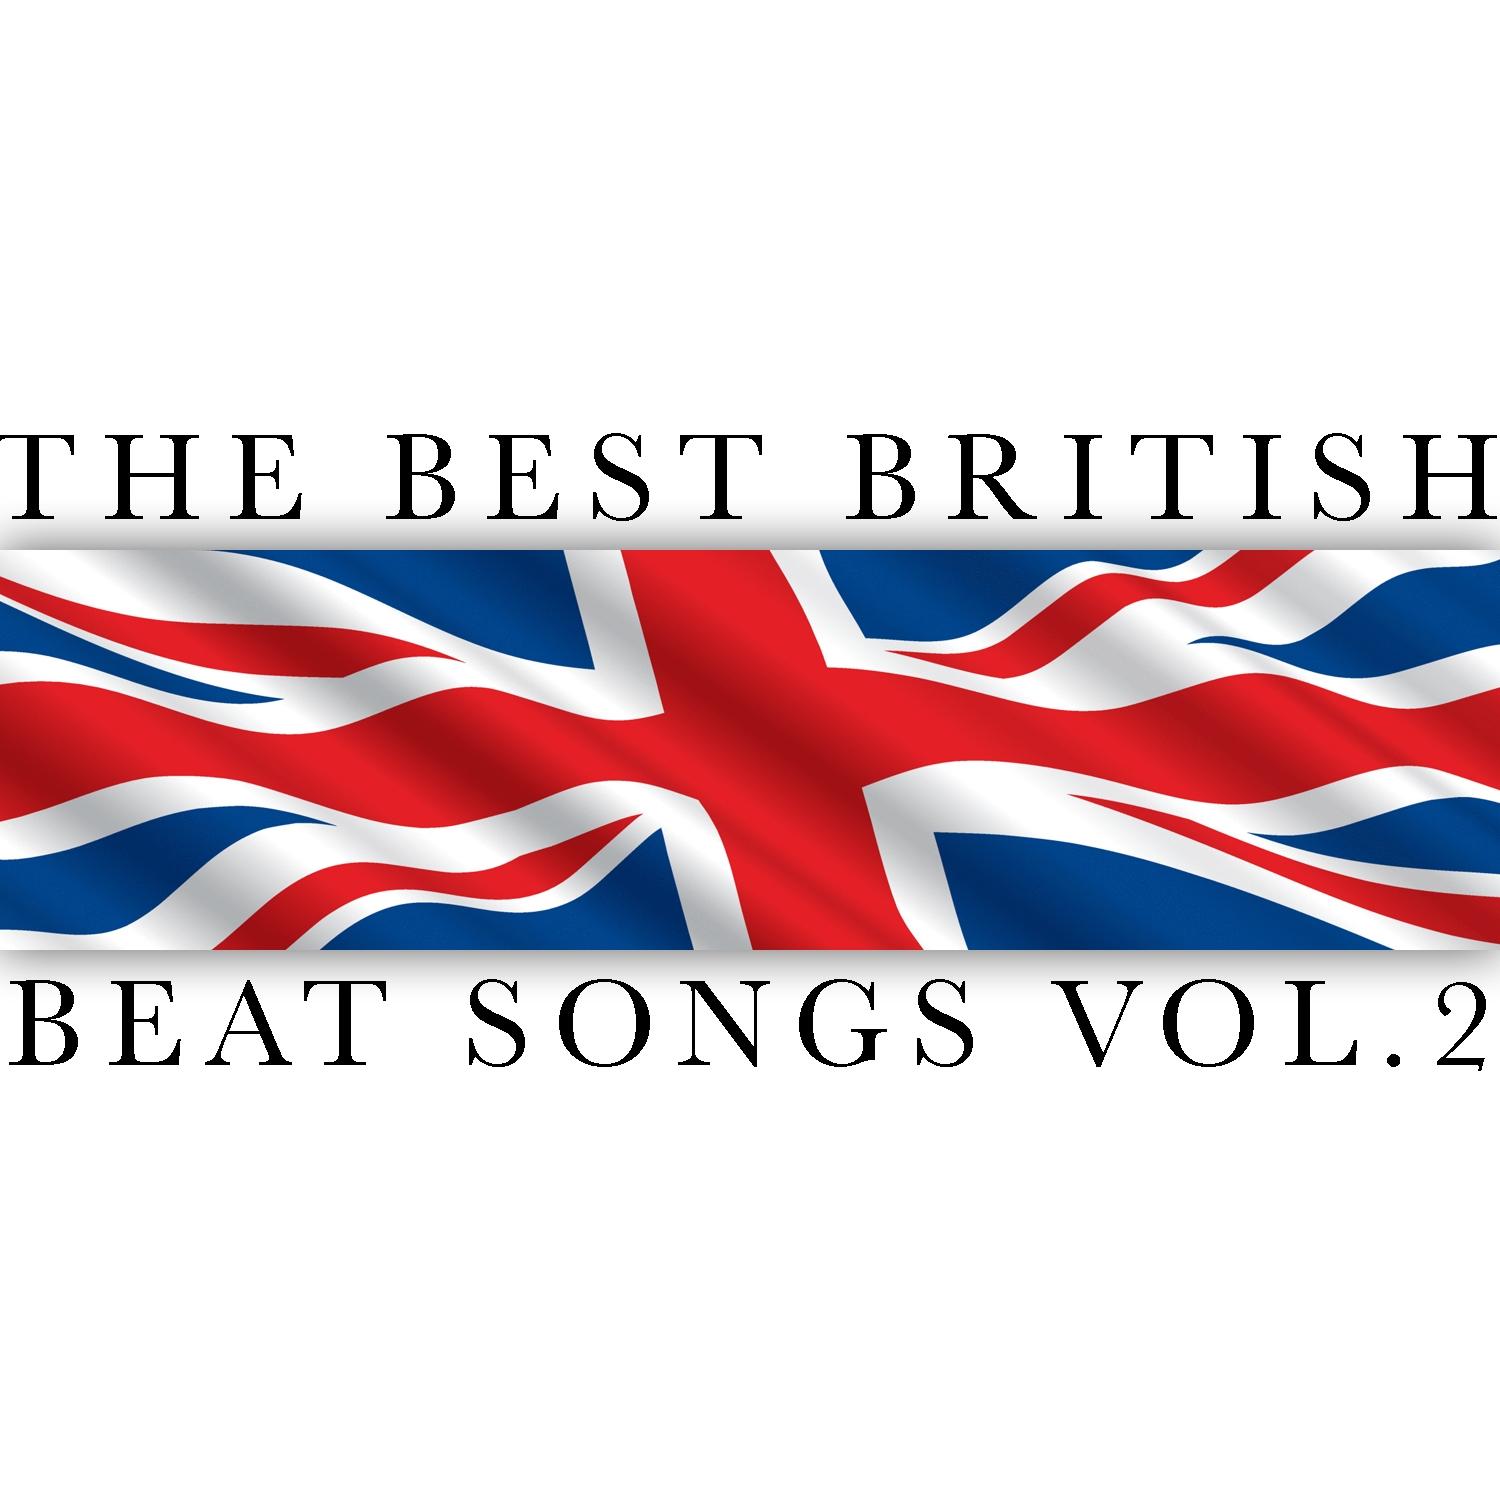 The Best British Beat Songs Vol. 2